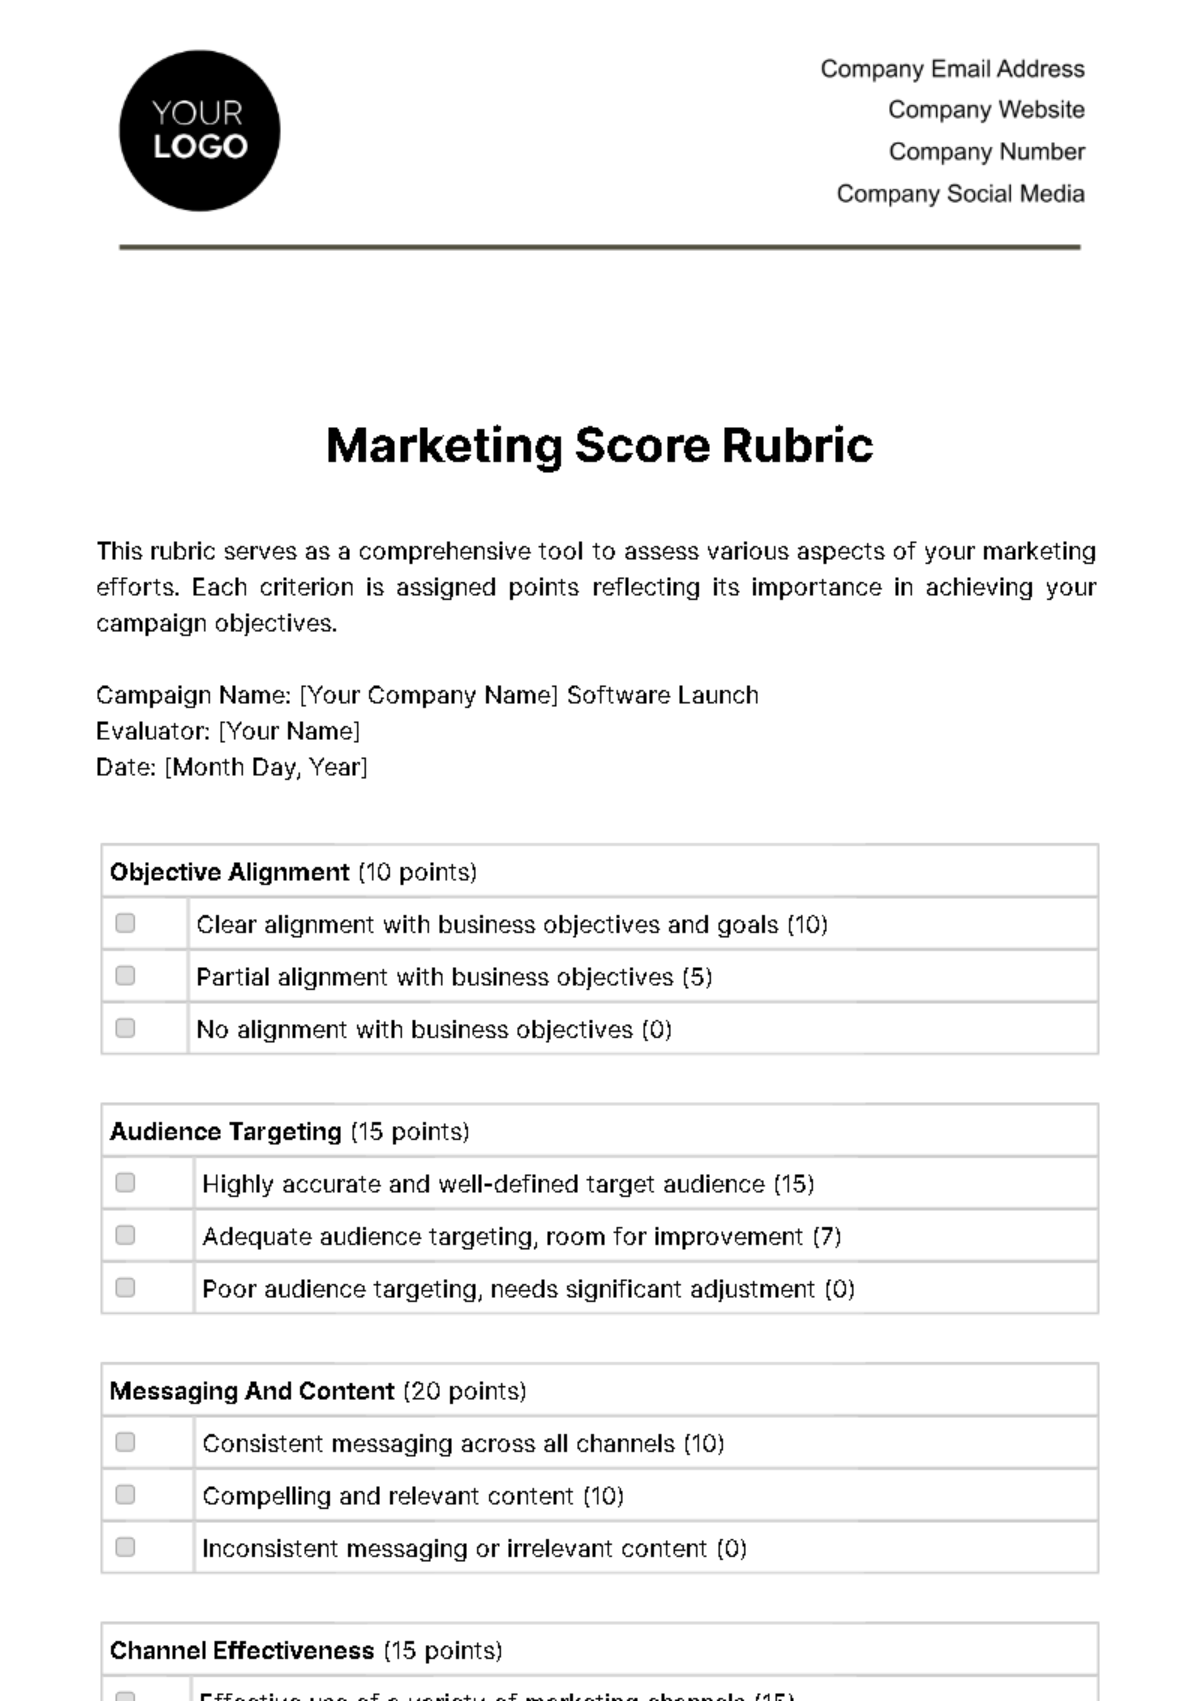 Marketing Score Rubric Template